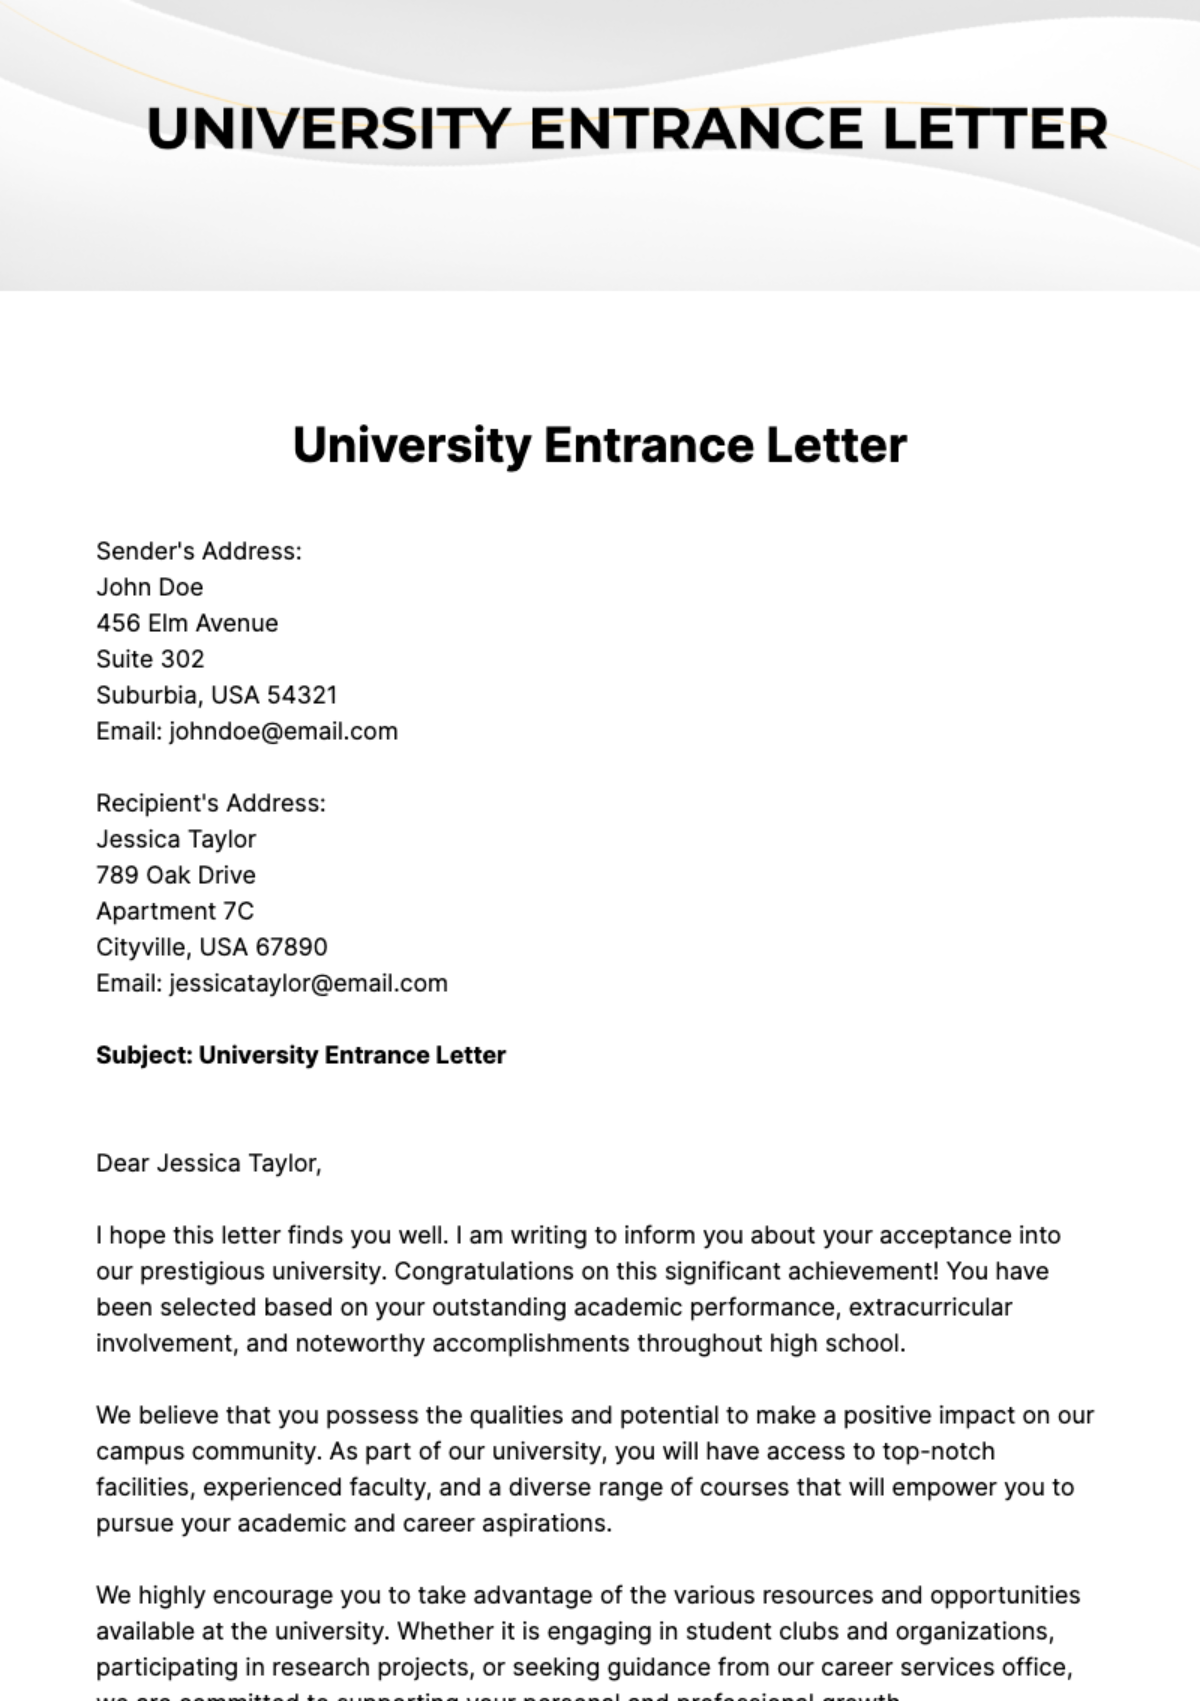 Free University Entrance Letter Template